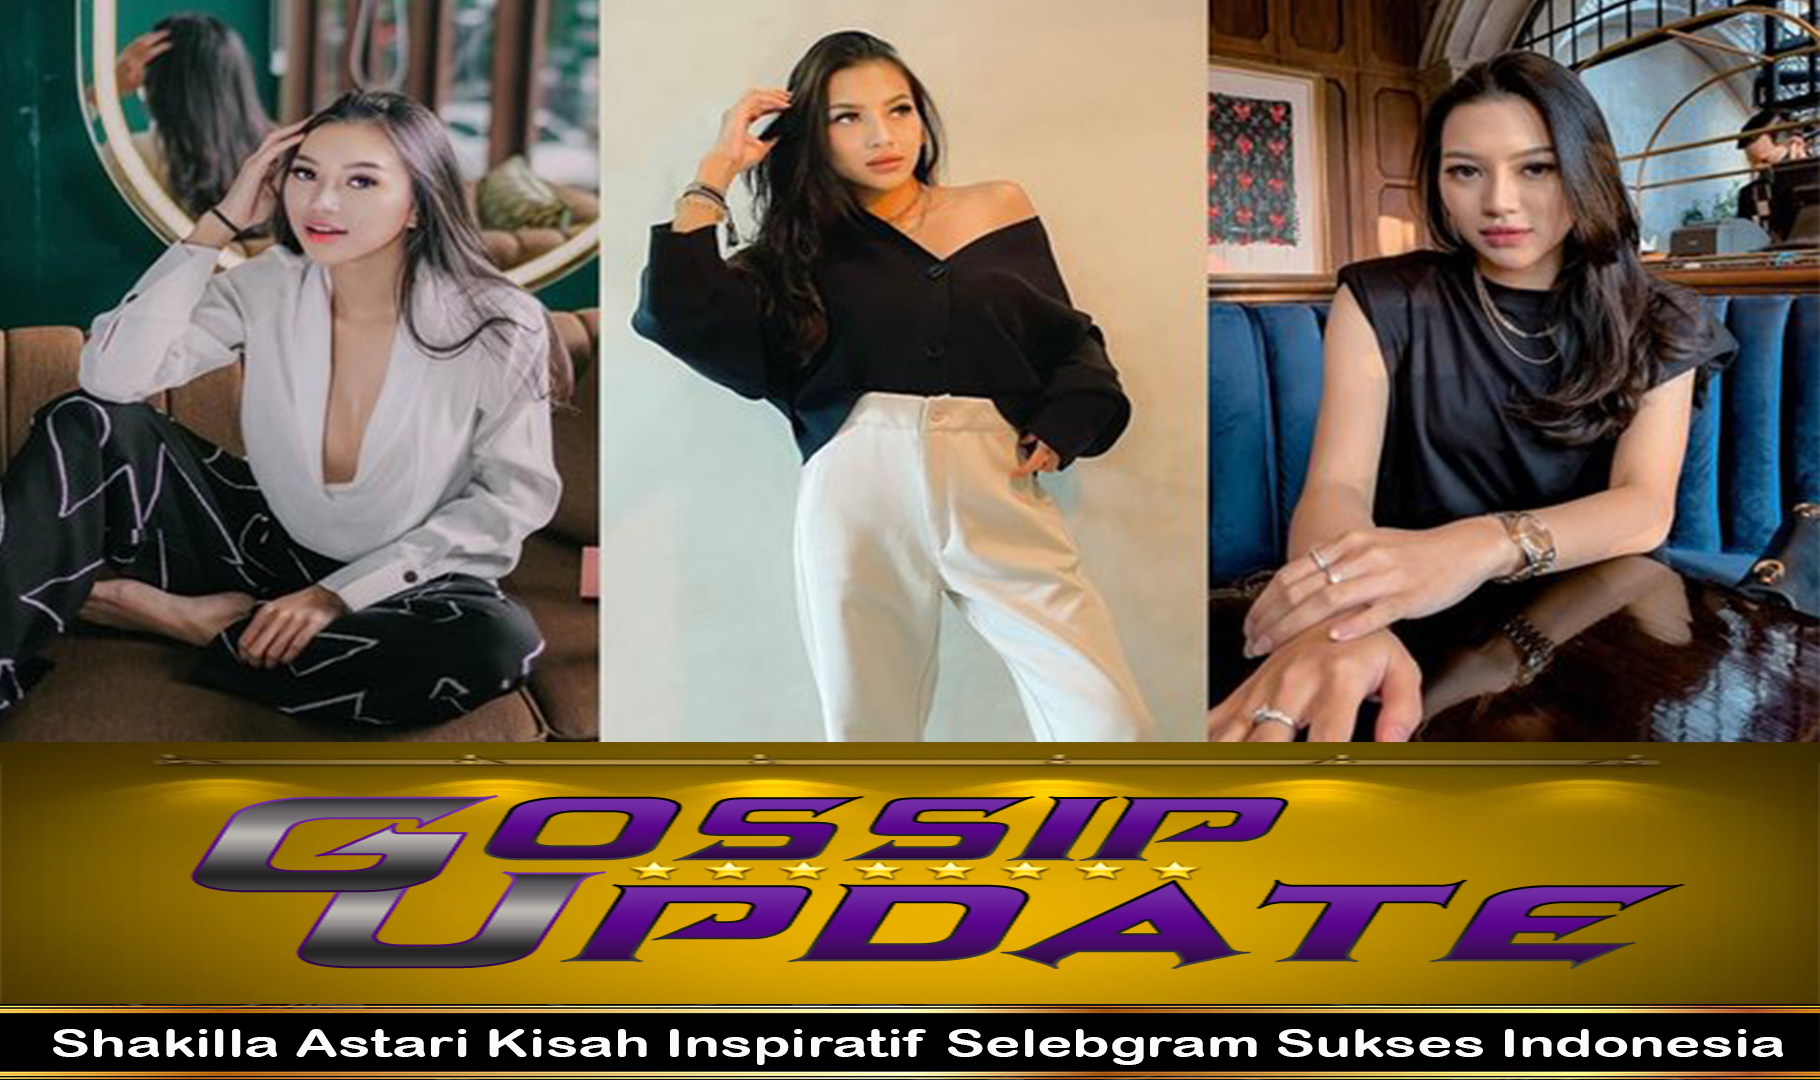 Shakilla Astari Kisah Inspiratif Selebgram Sukses Indonesia